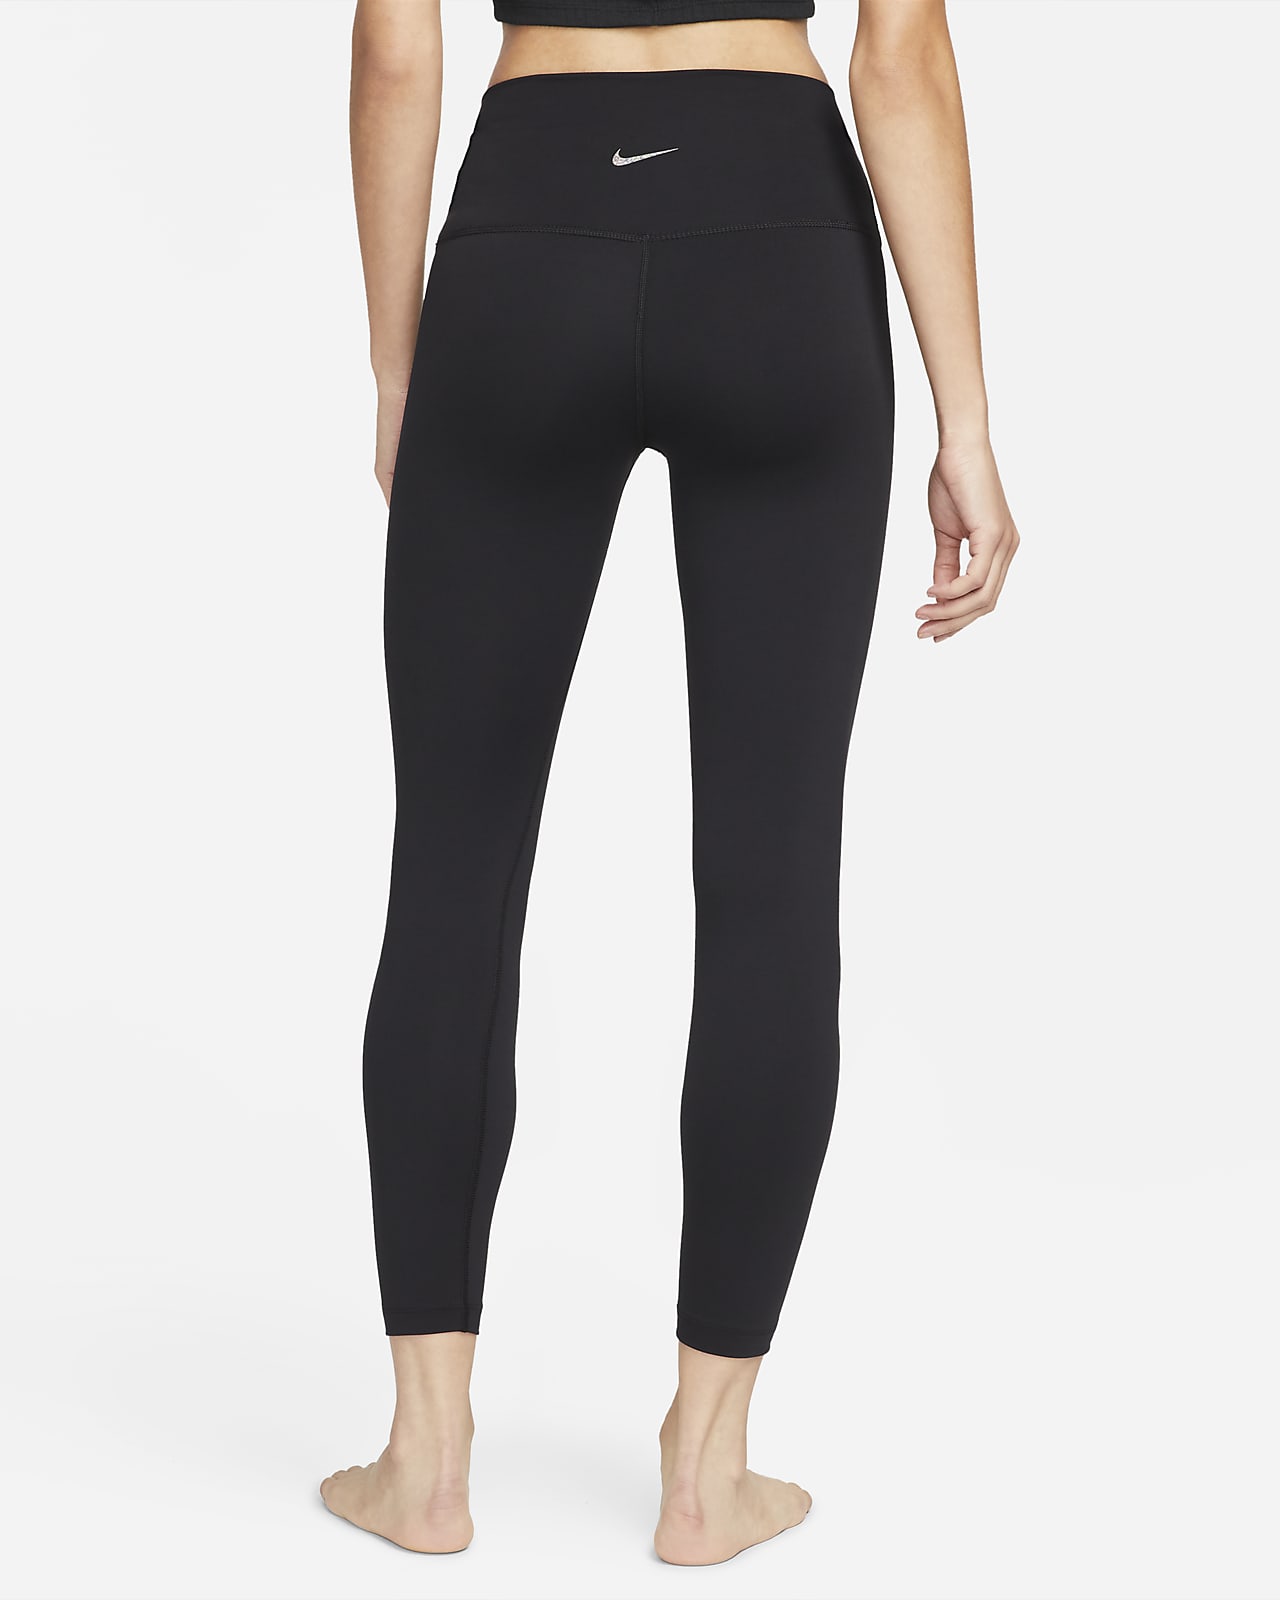 High Waisted Yoga Pants for Women Leggings Black Yoga Pants Size XL